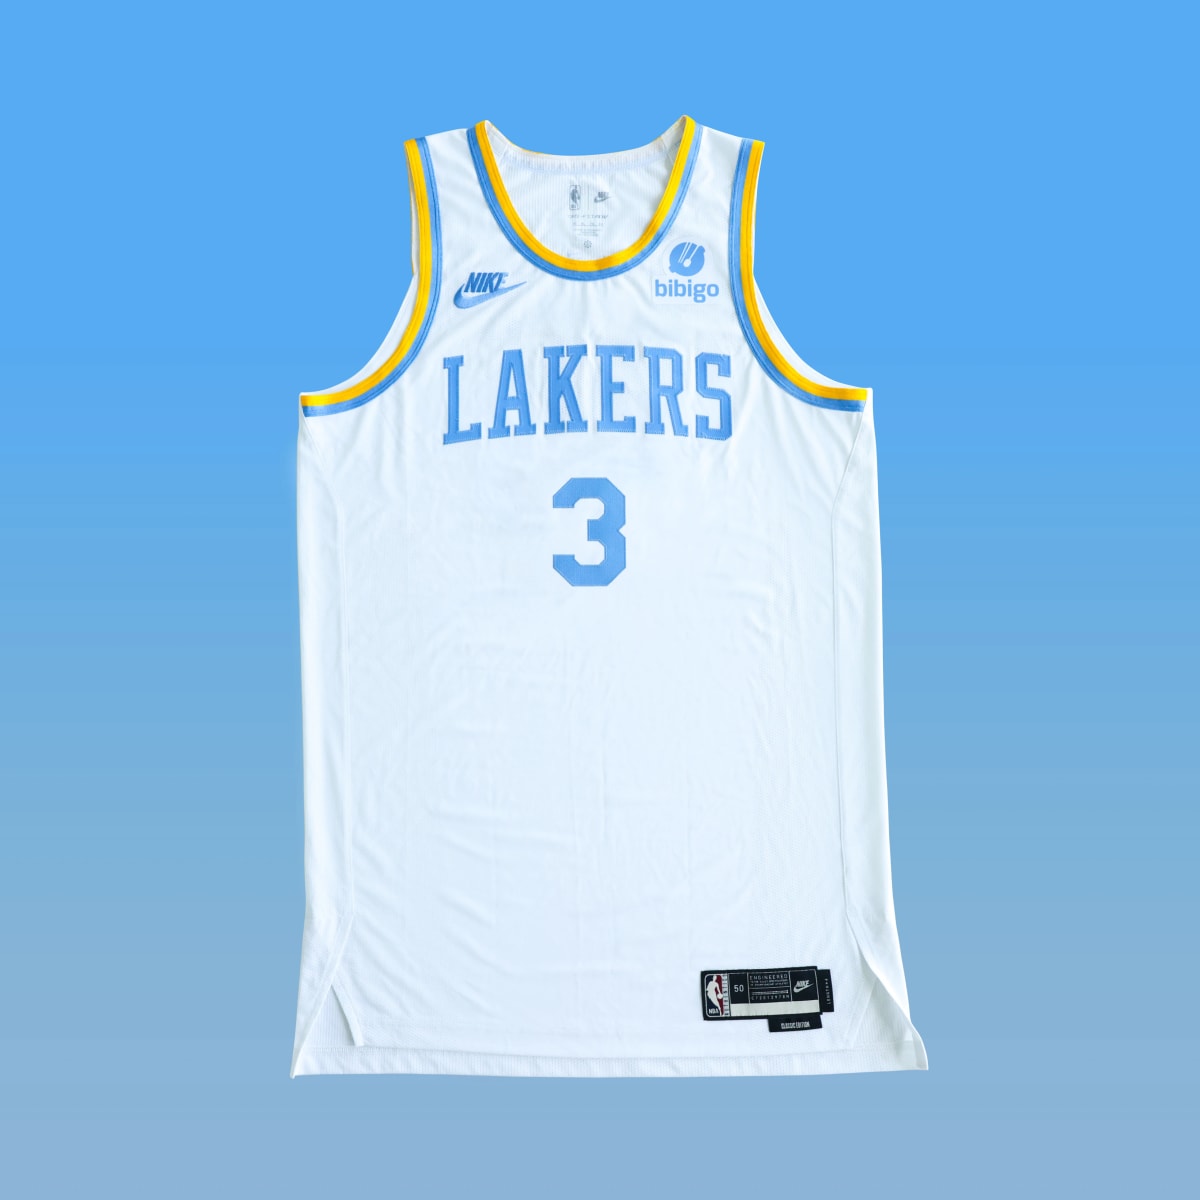 Lakers Jerseys for sale in Denver, Colorado